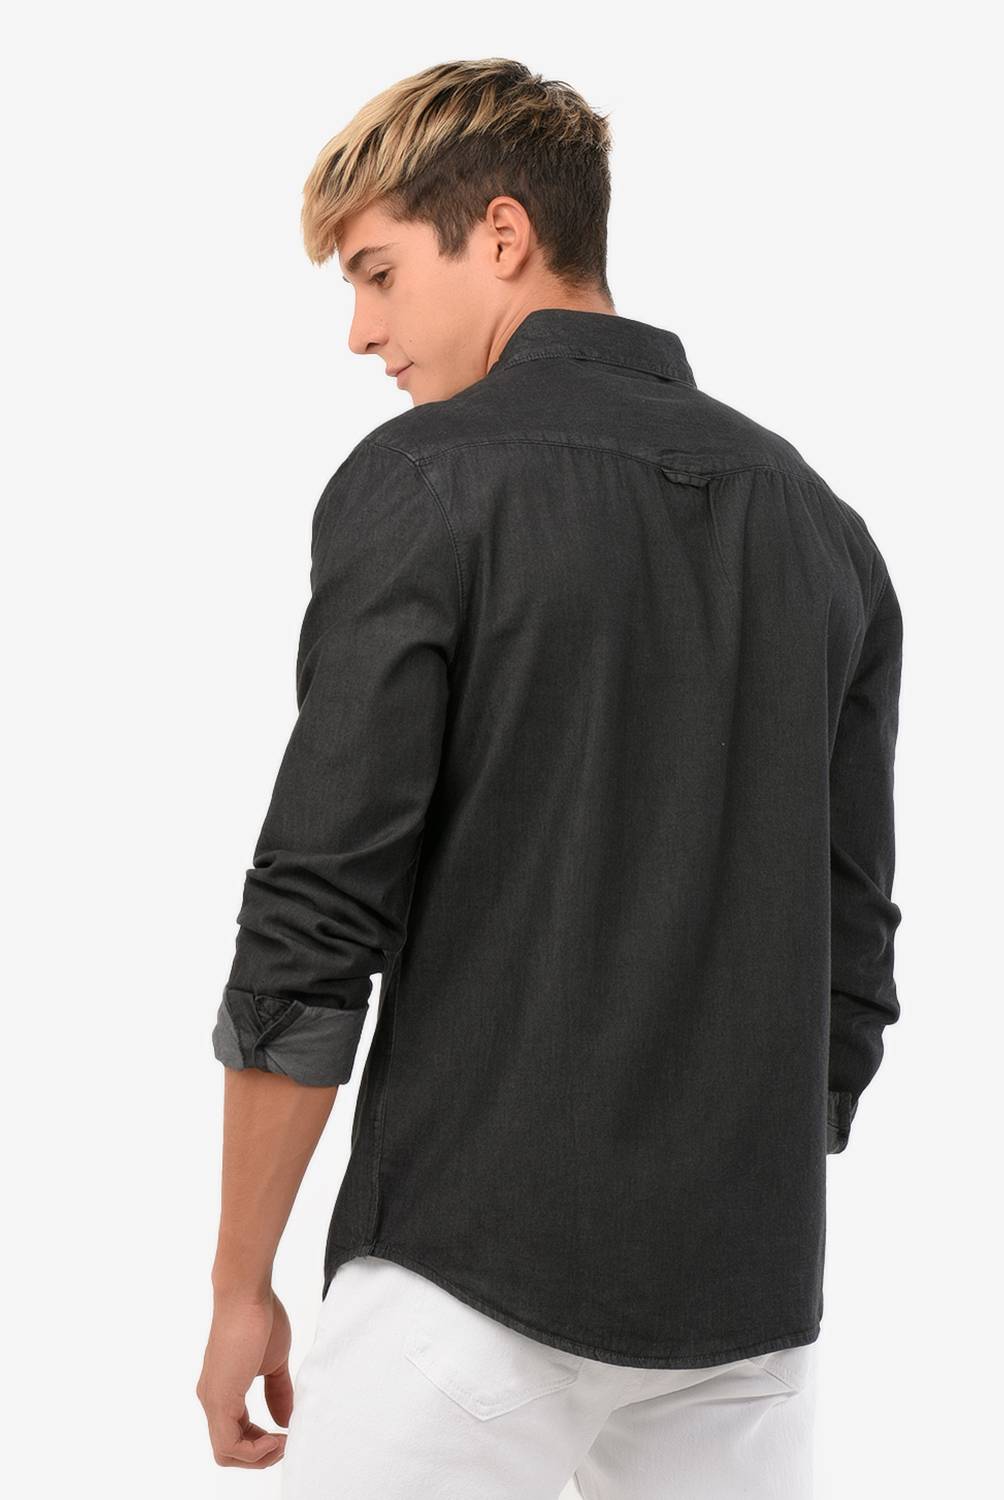 BEARCLIFF - Camisa de jean para Hombre Slim Bearcliff